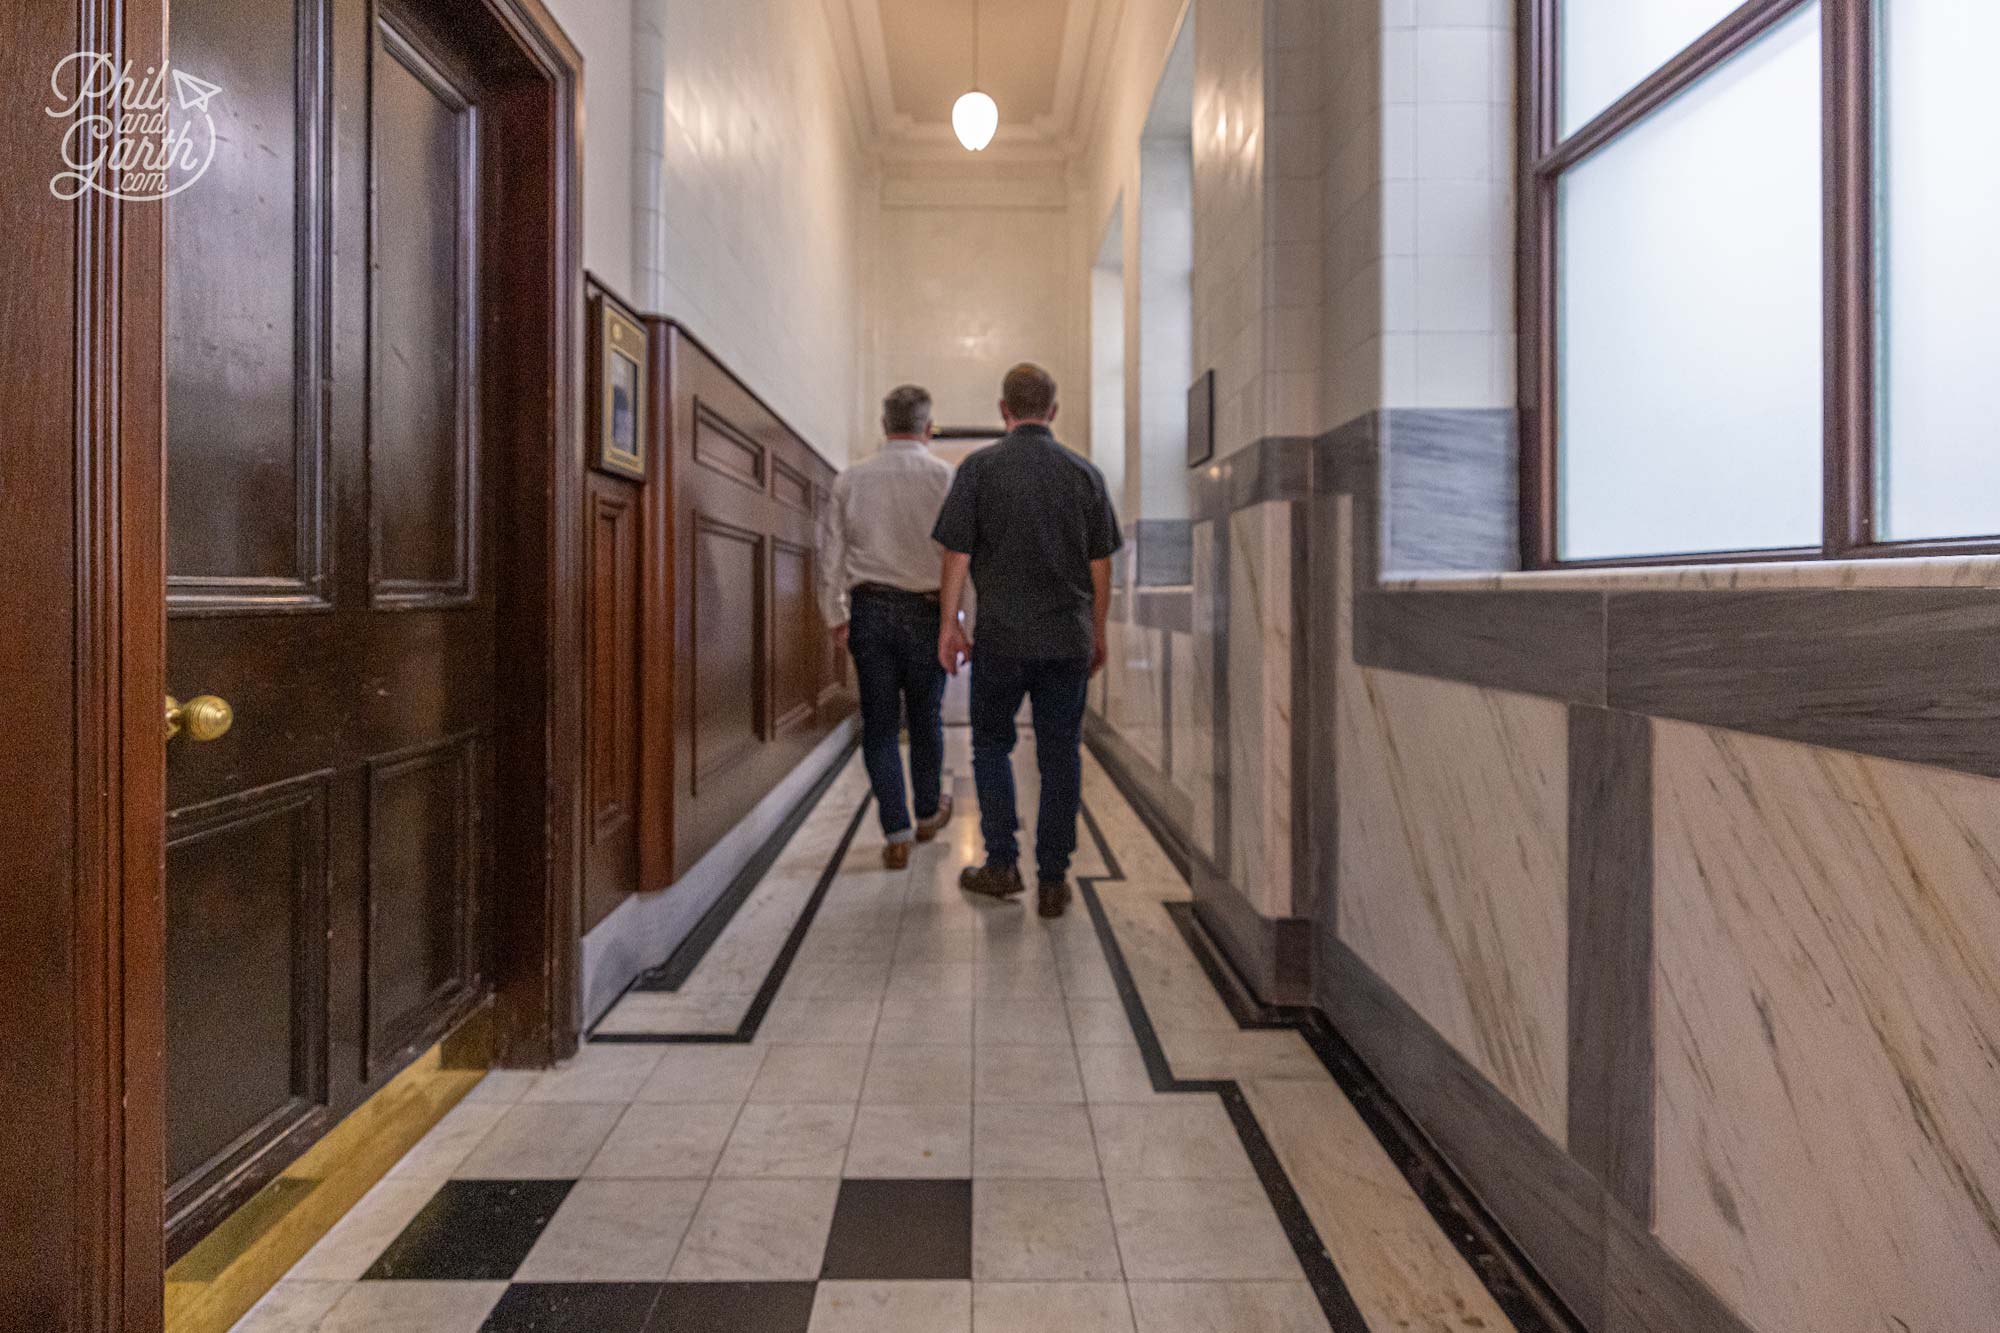 Exploring the heritage rooms off the corridors of Titanic Hotel Belfast